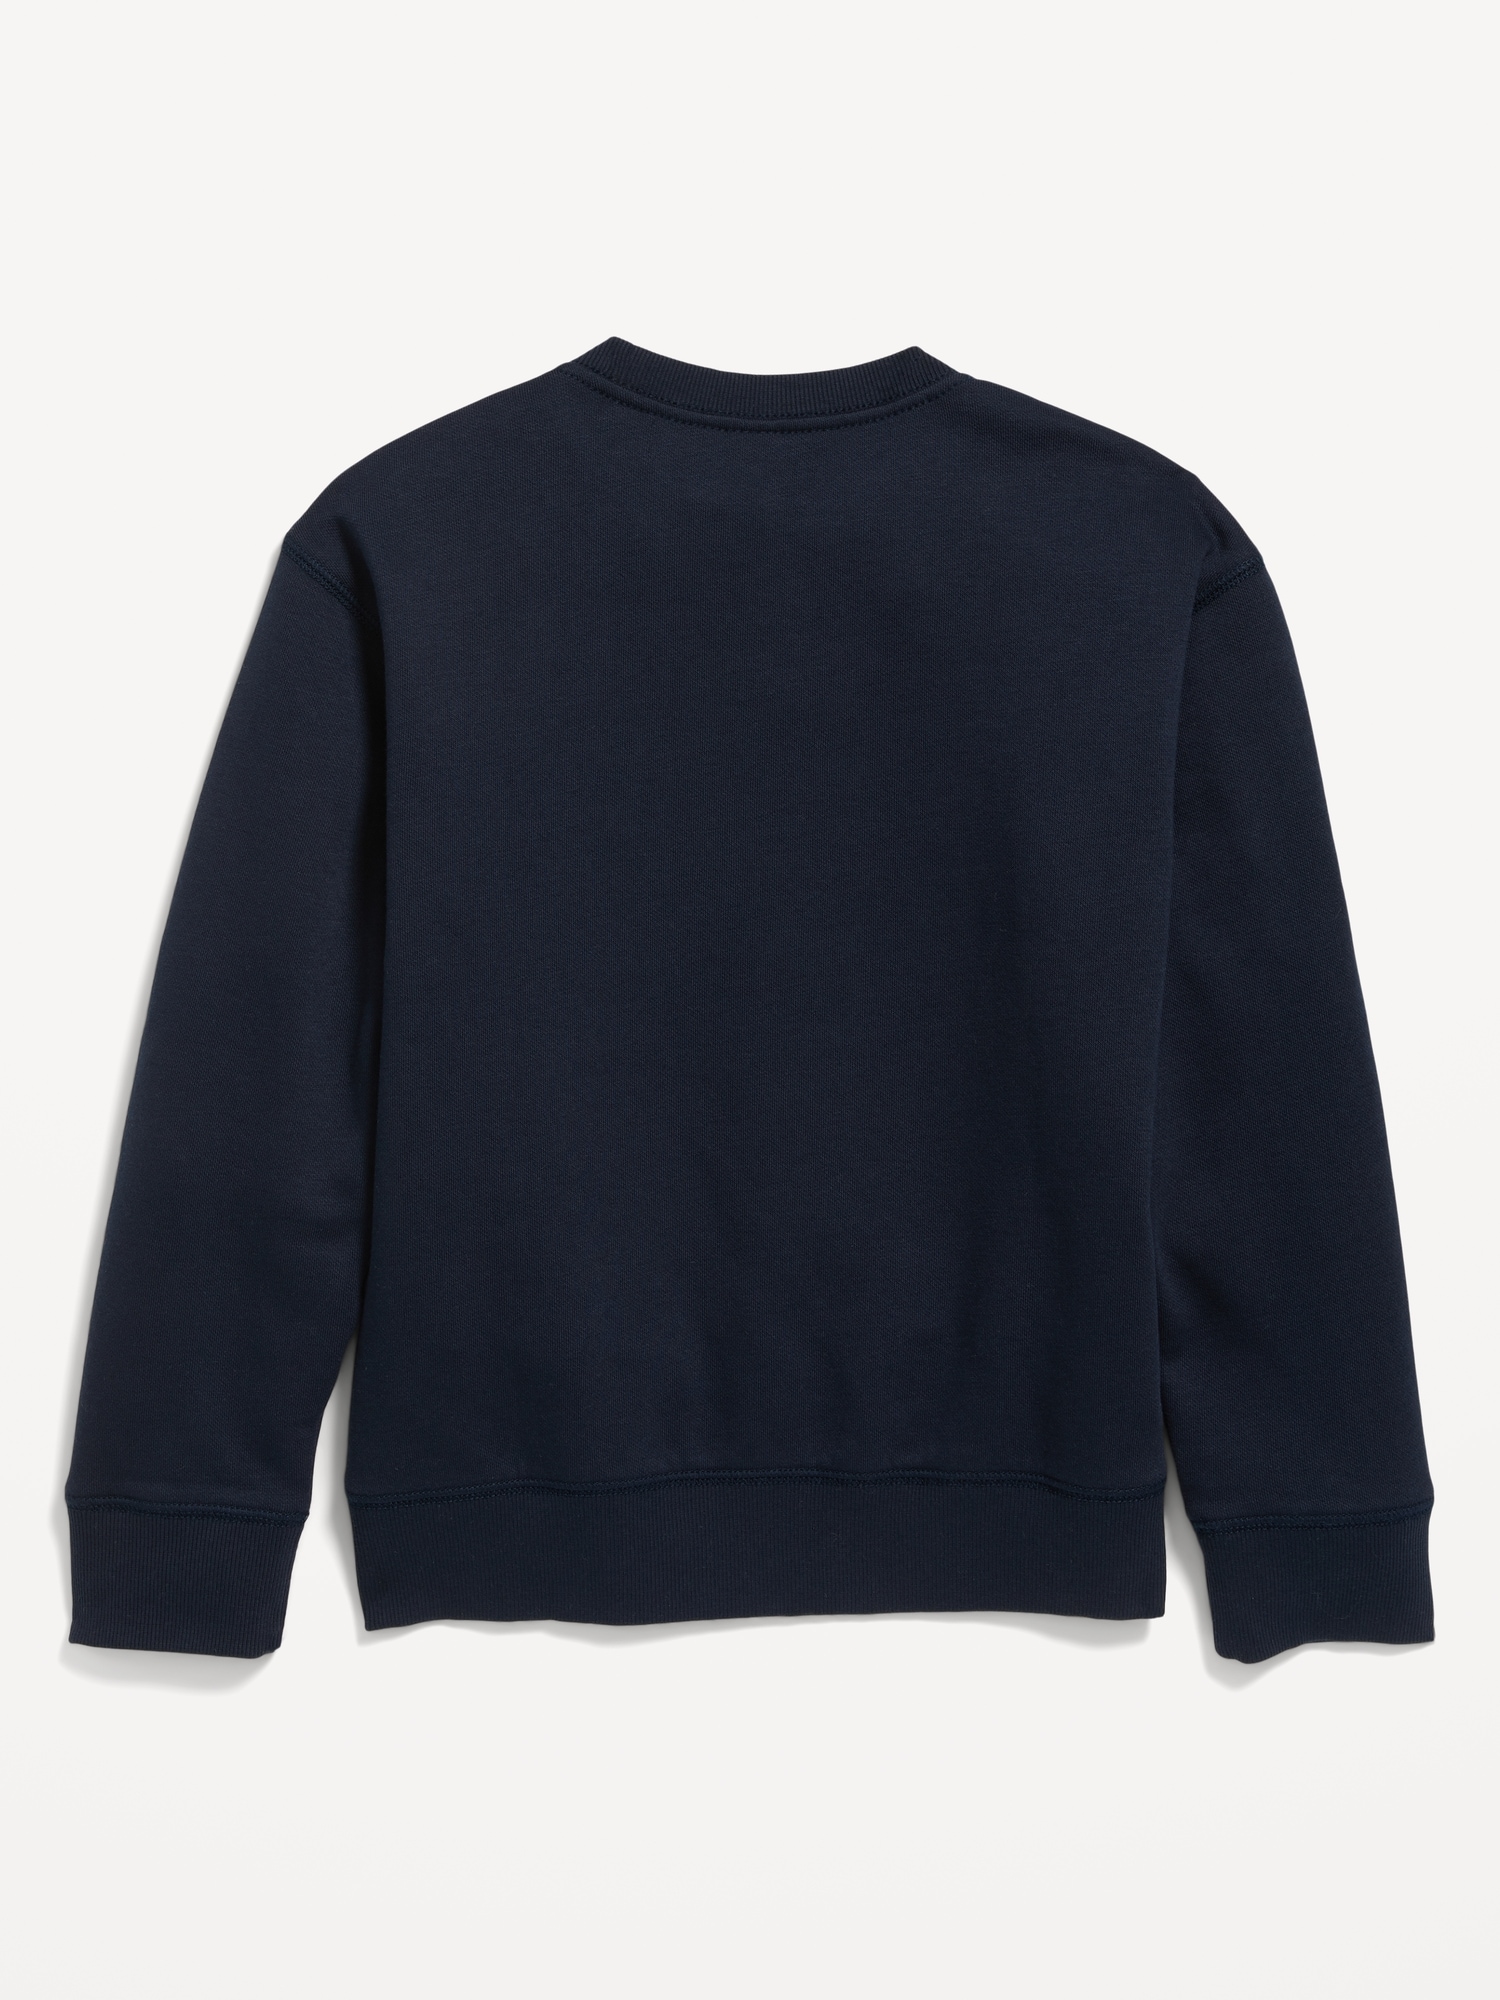 Crew-Neck Graphic Sweatshirt for Boys | Old Navy